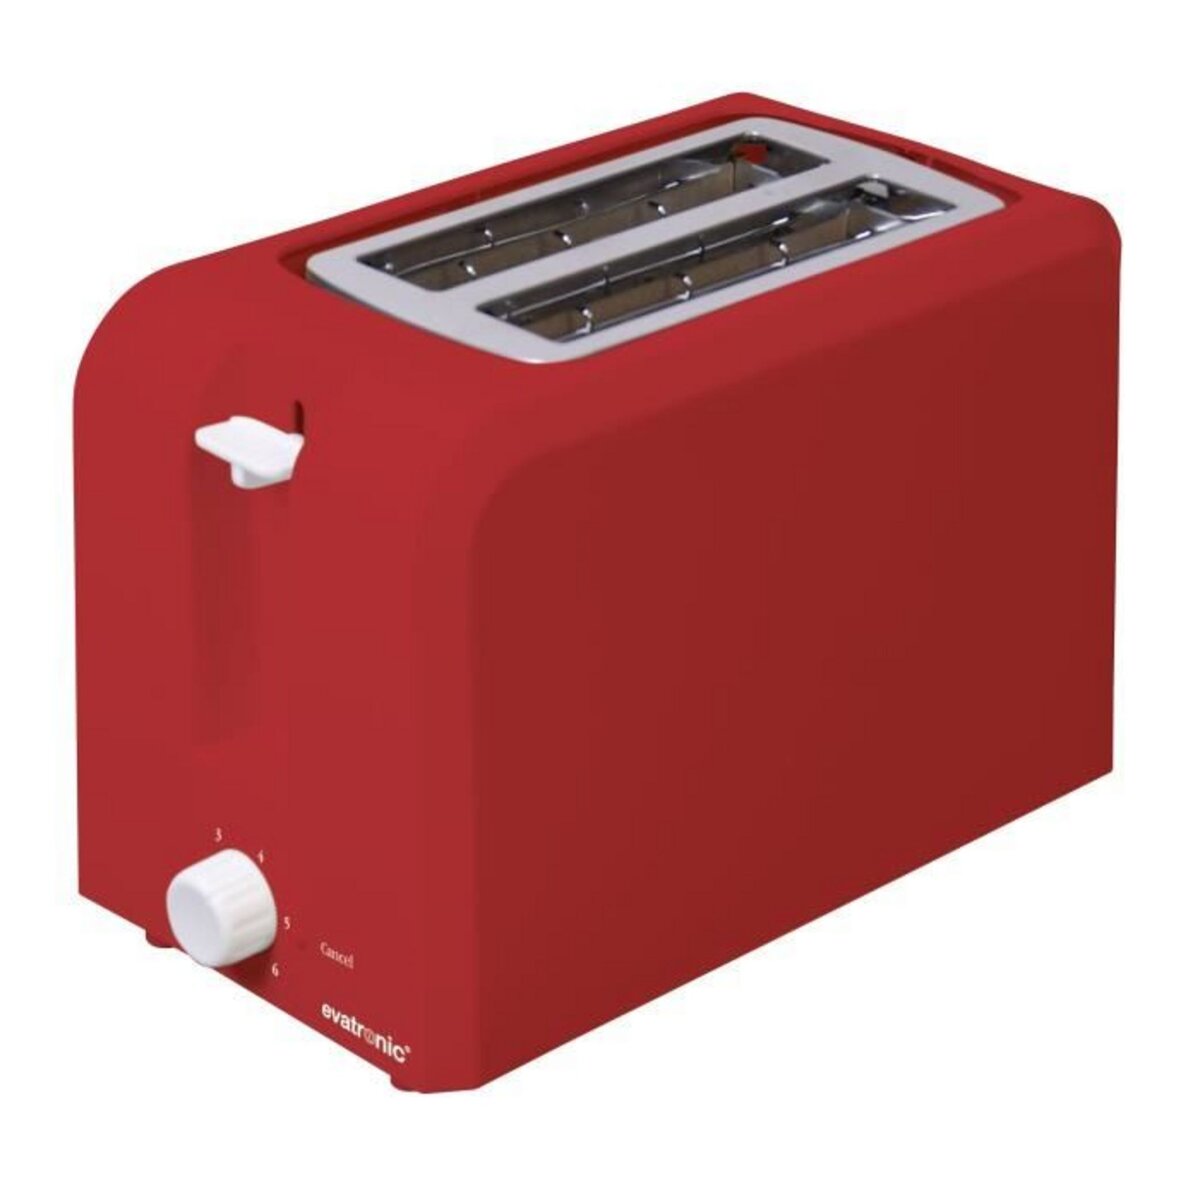 EVATRONIC Toaster 000616 Toaster Rouge